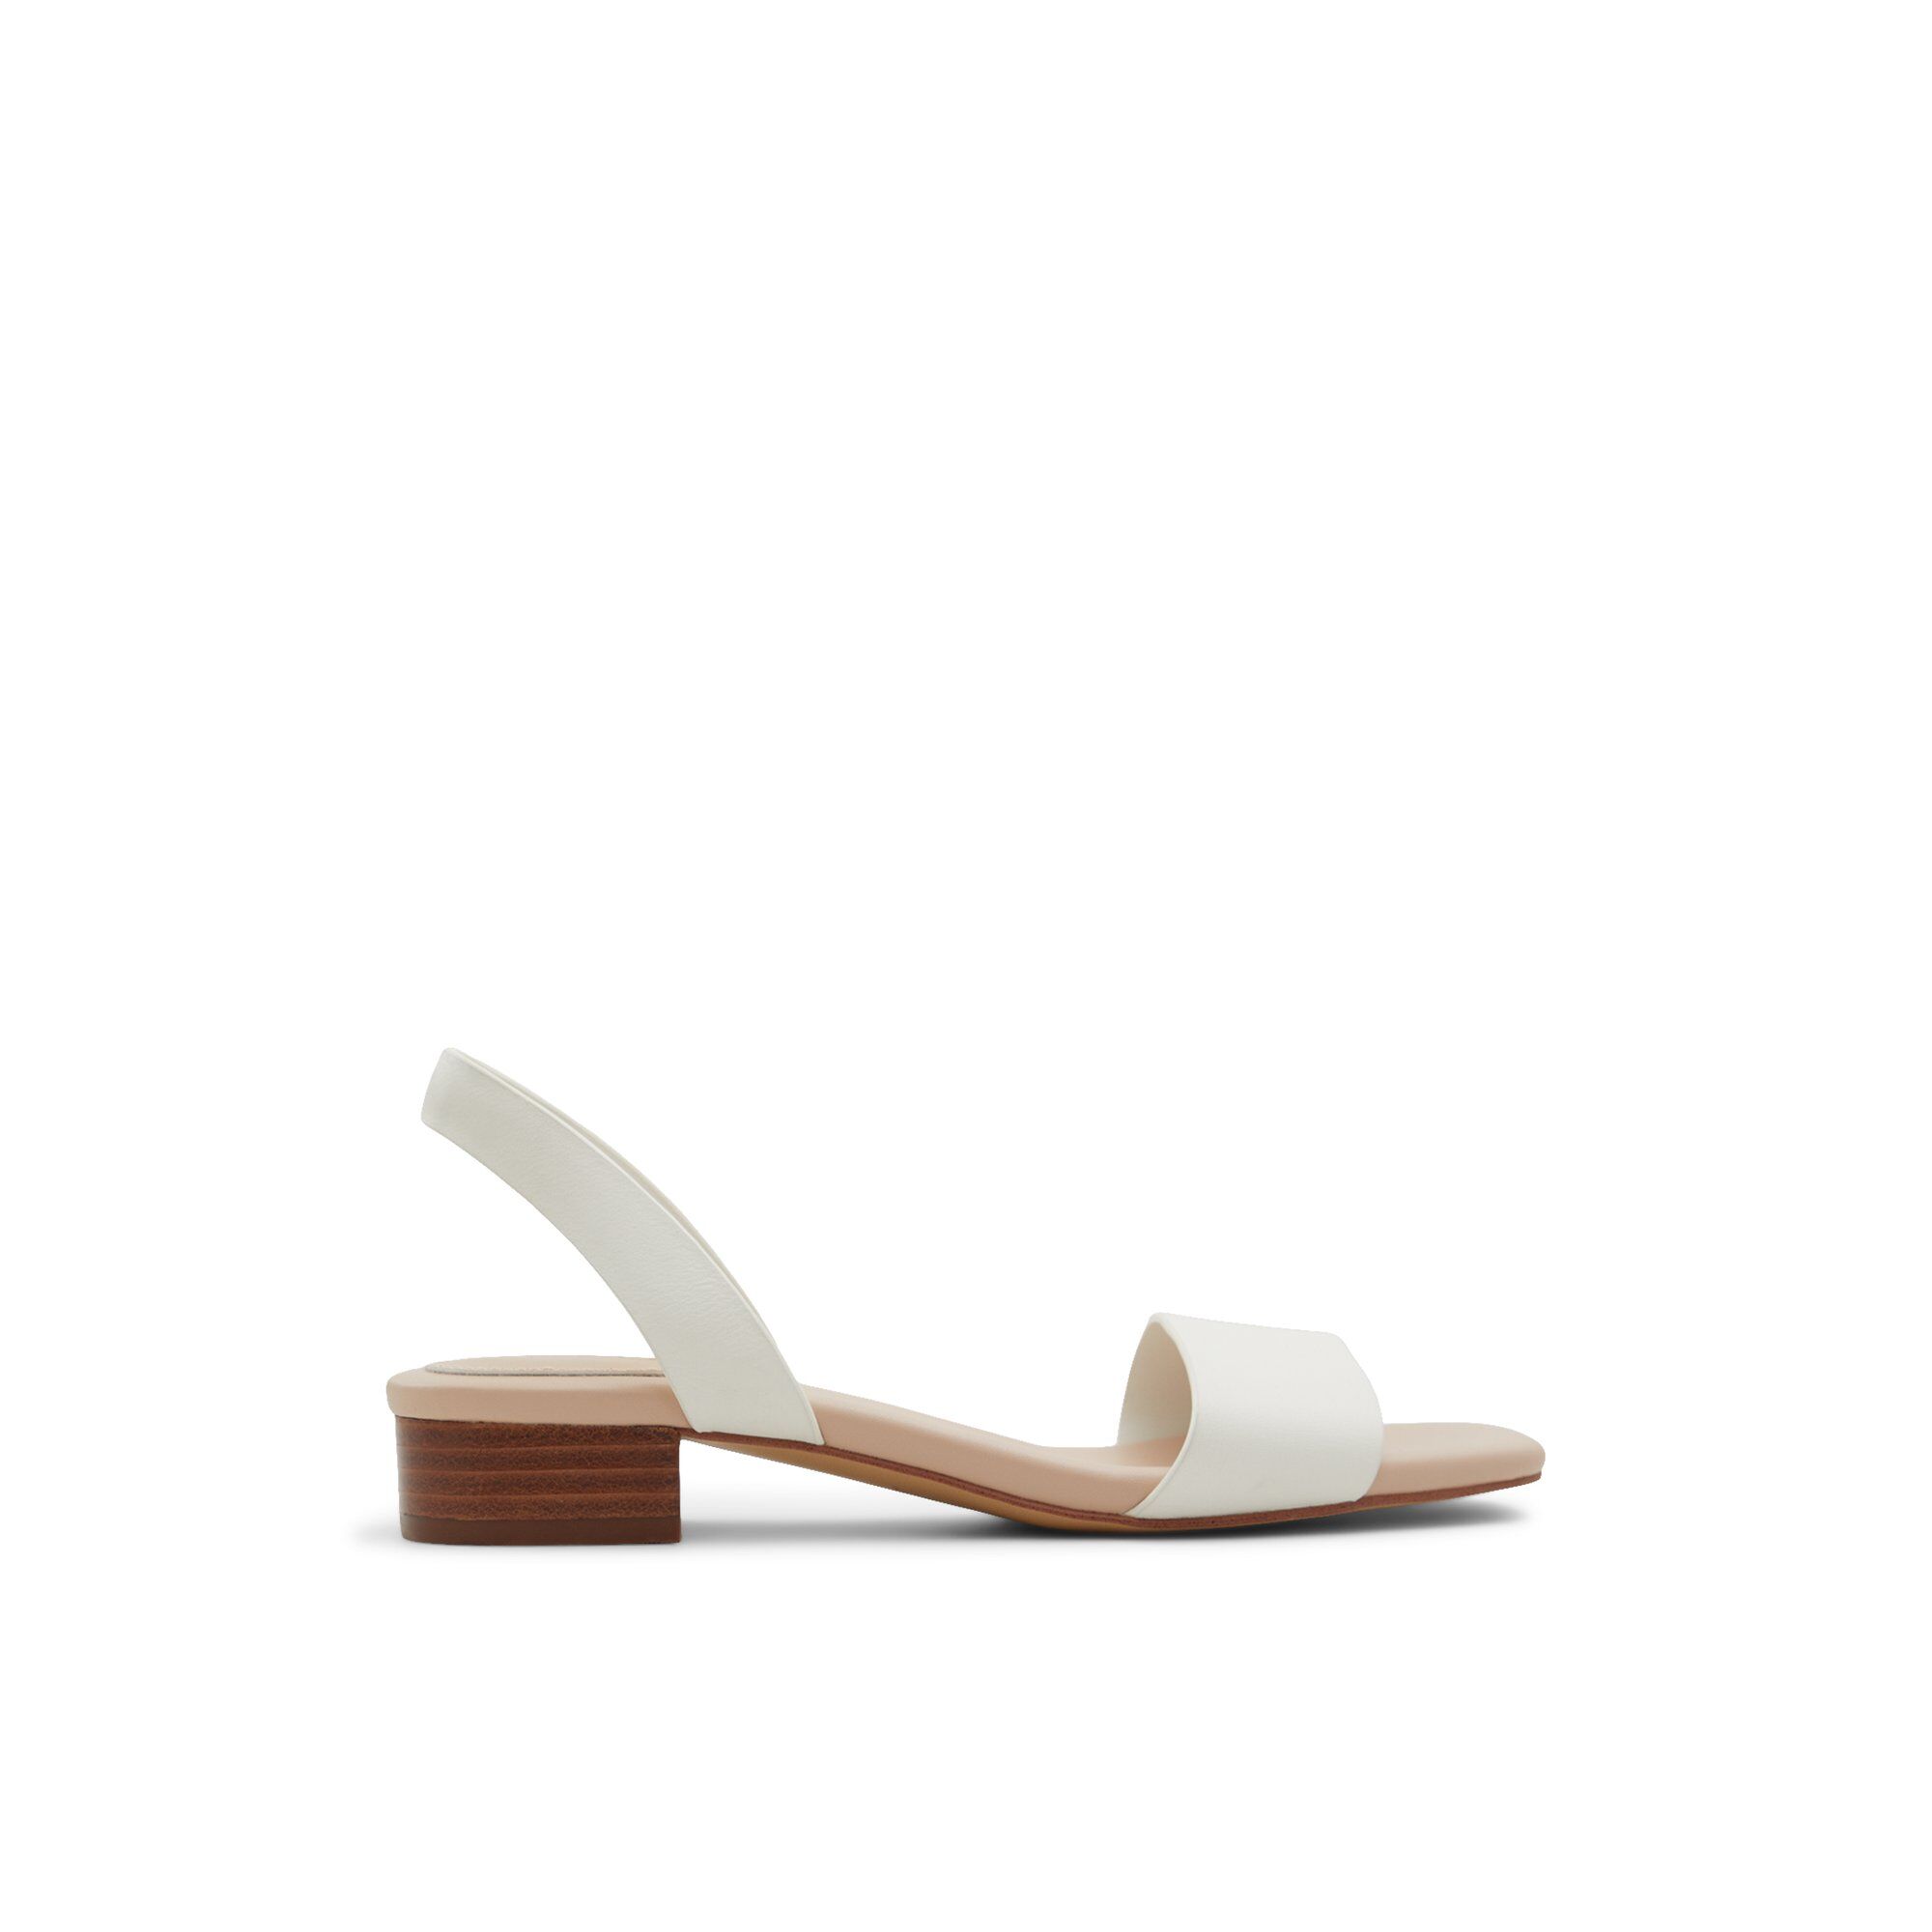 ALDO Dorenna - Women's Kitten Heel - White, Size 11